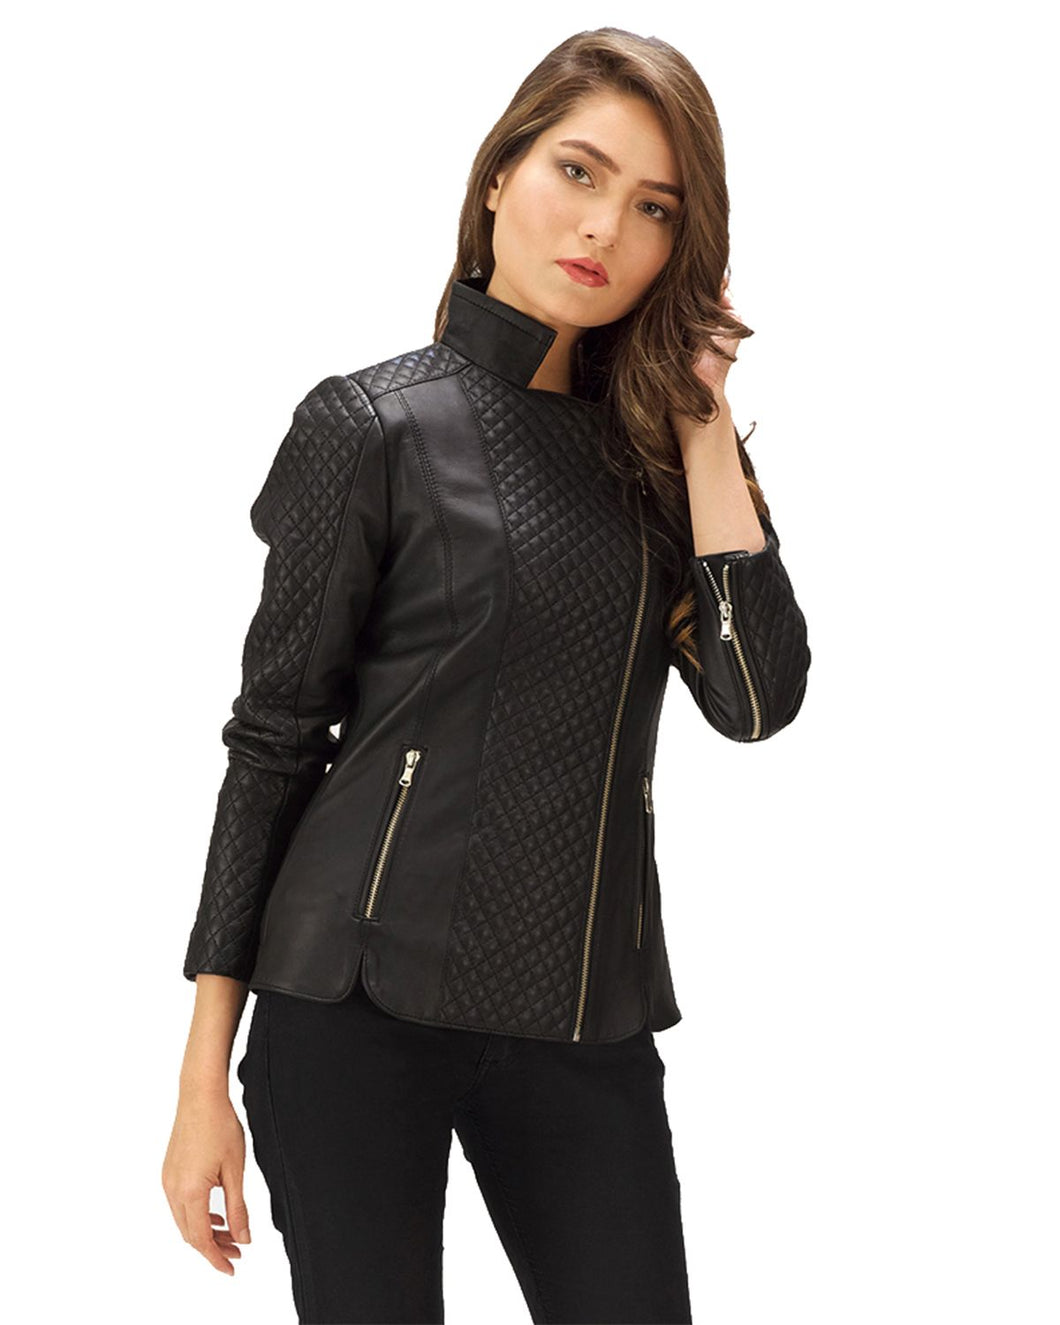 Women's Quilted Designer Black Leather Jacket